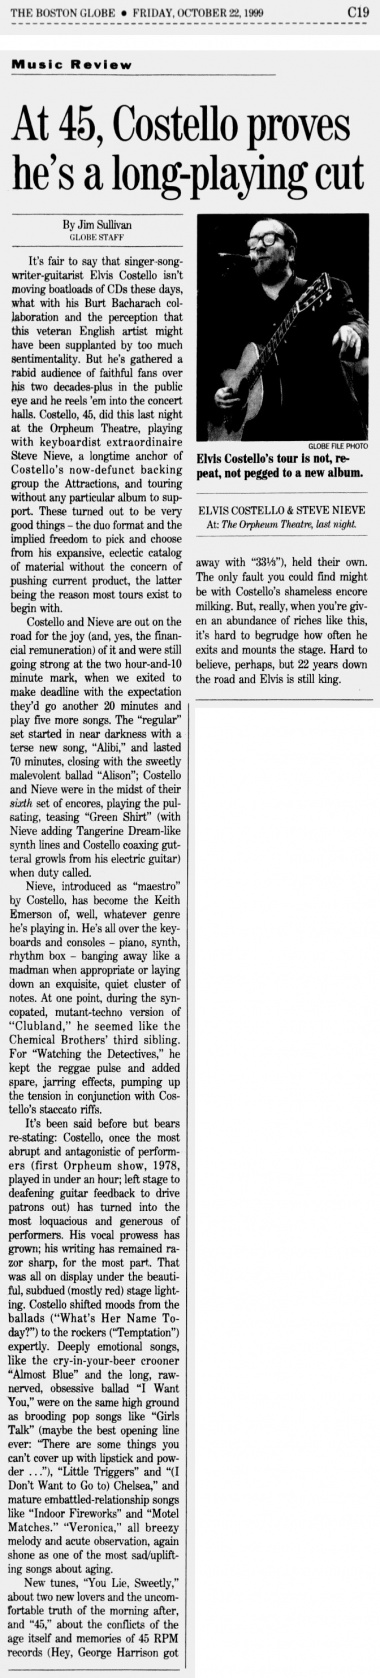 1999-10-22 Boston Globe page C19 clipping 01.jpg